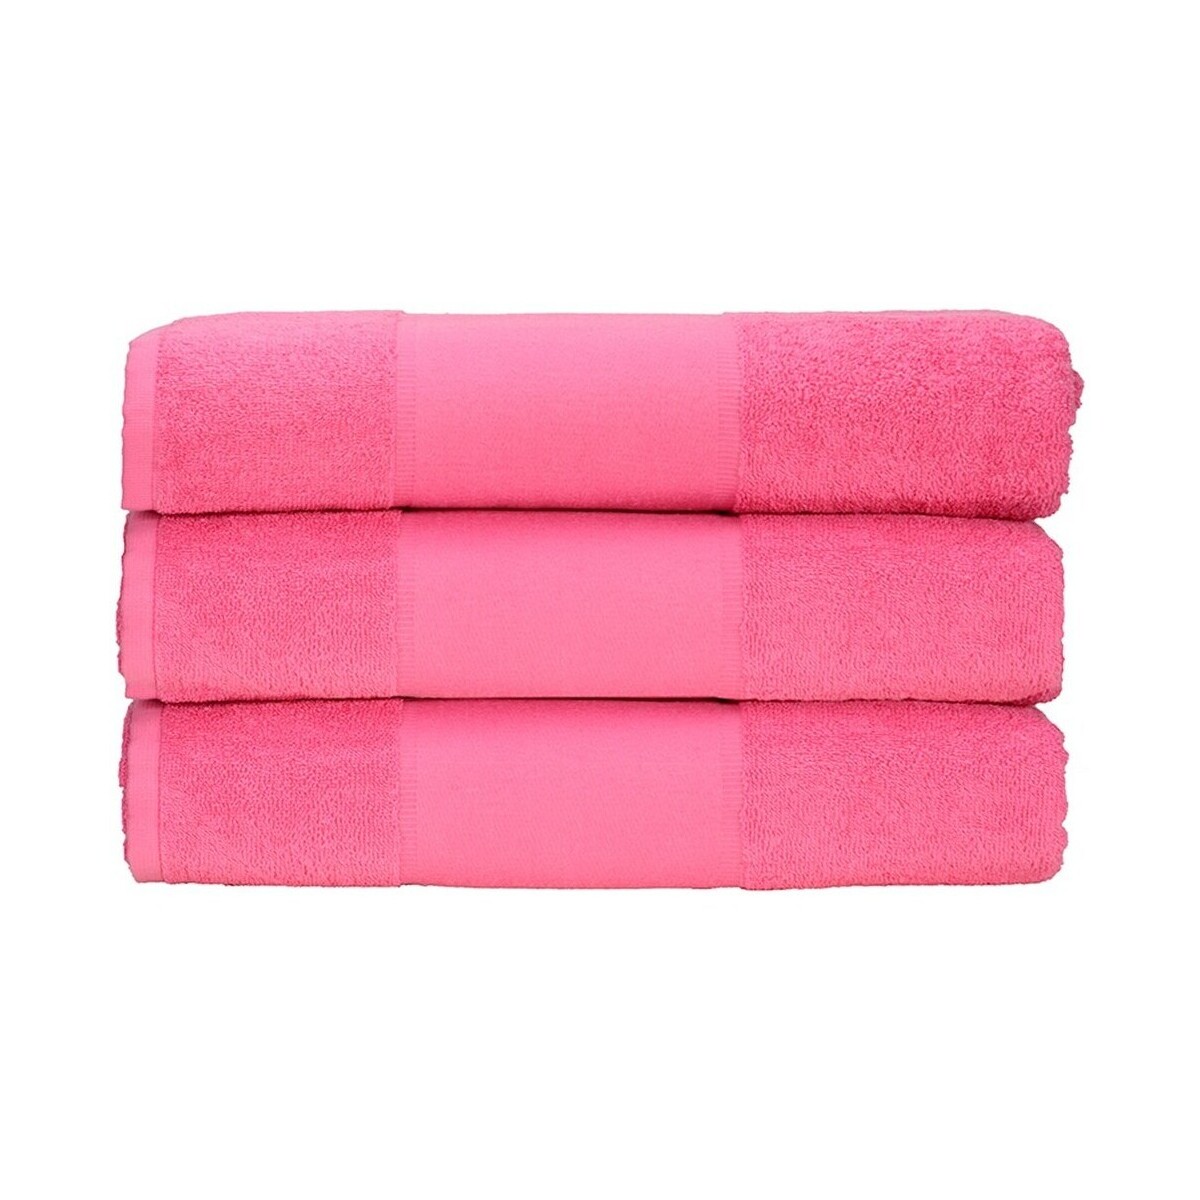 Casa Toalla y manopla de toalla A&r Towels 50 cm x 100 cm RW6036 Rojo